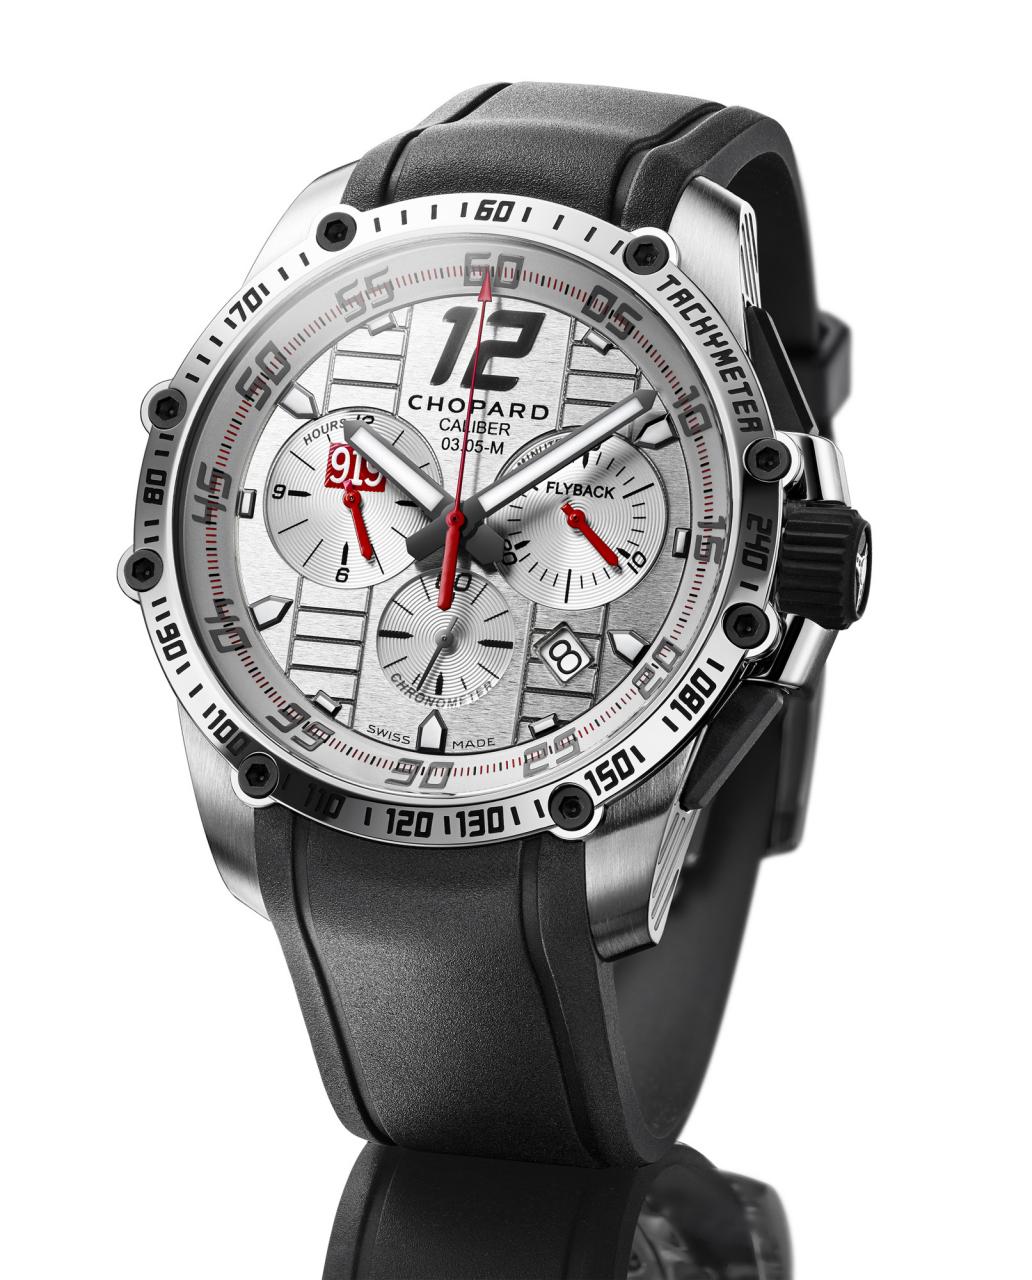 Chopard Superfast Chrono Porsche 919 replica watch